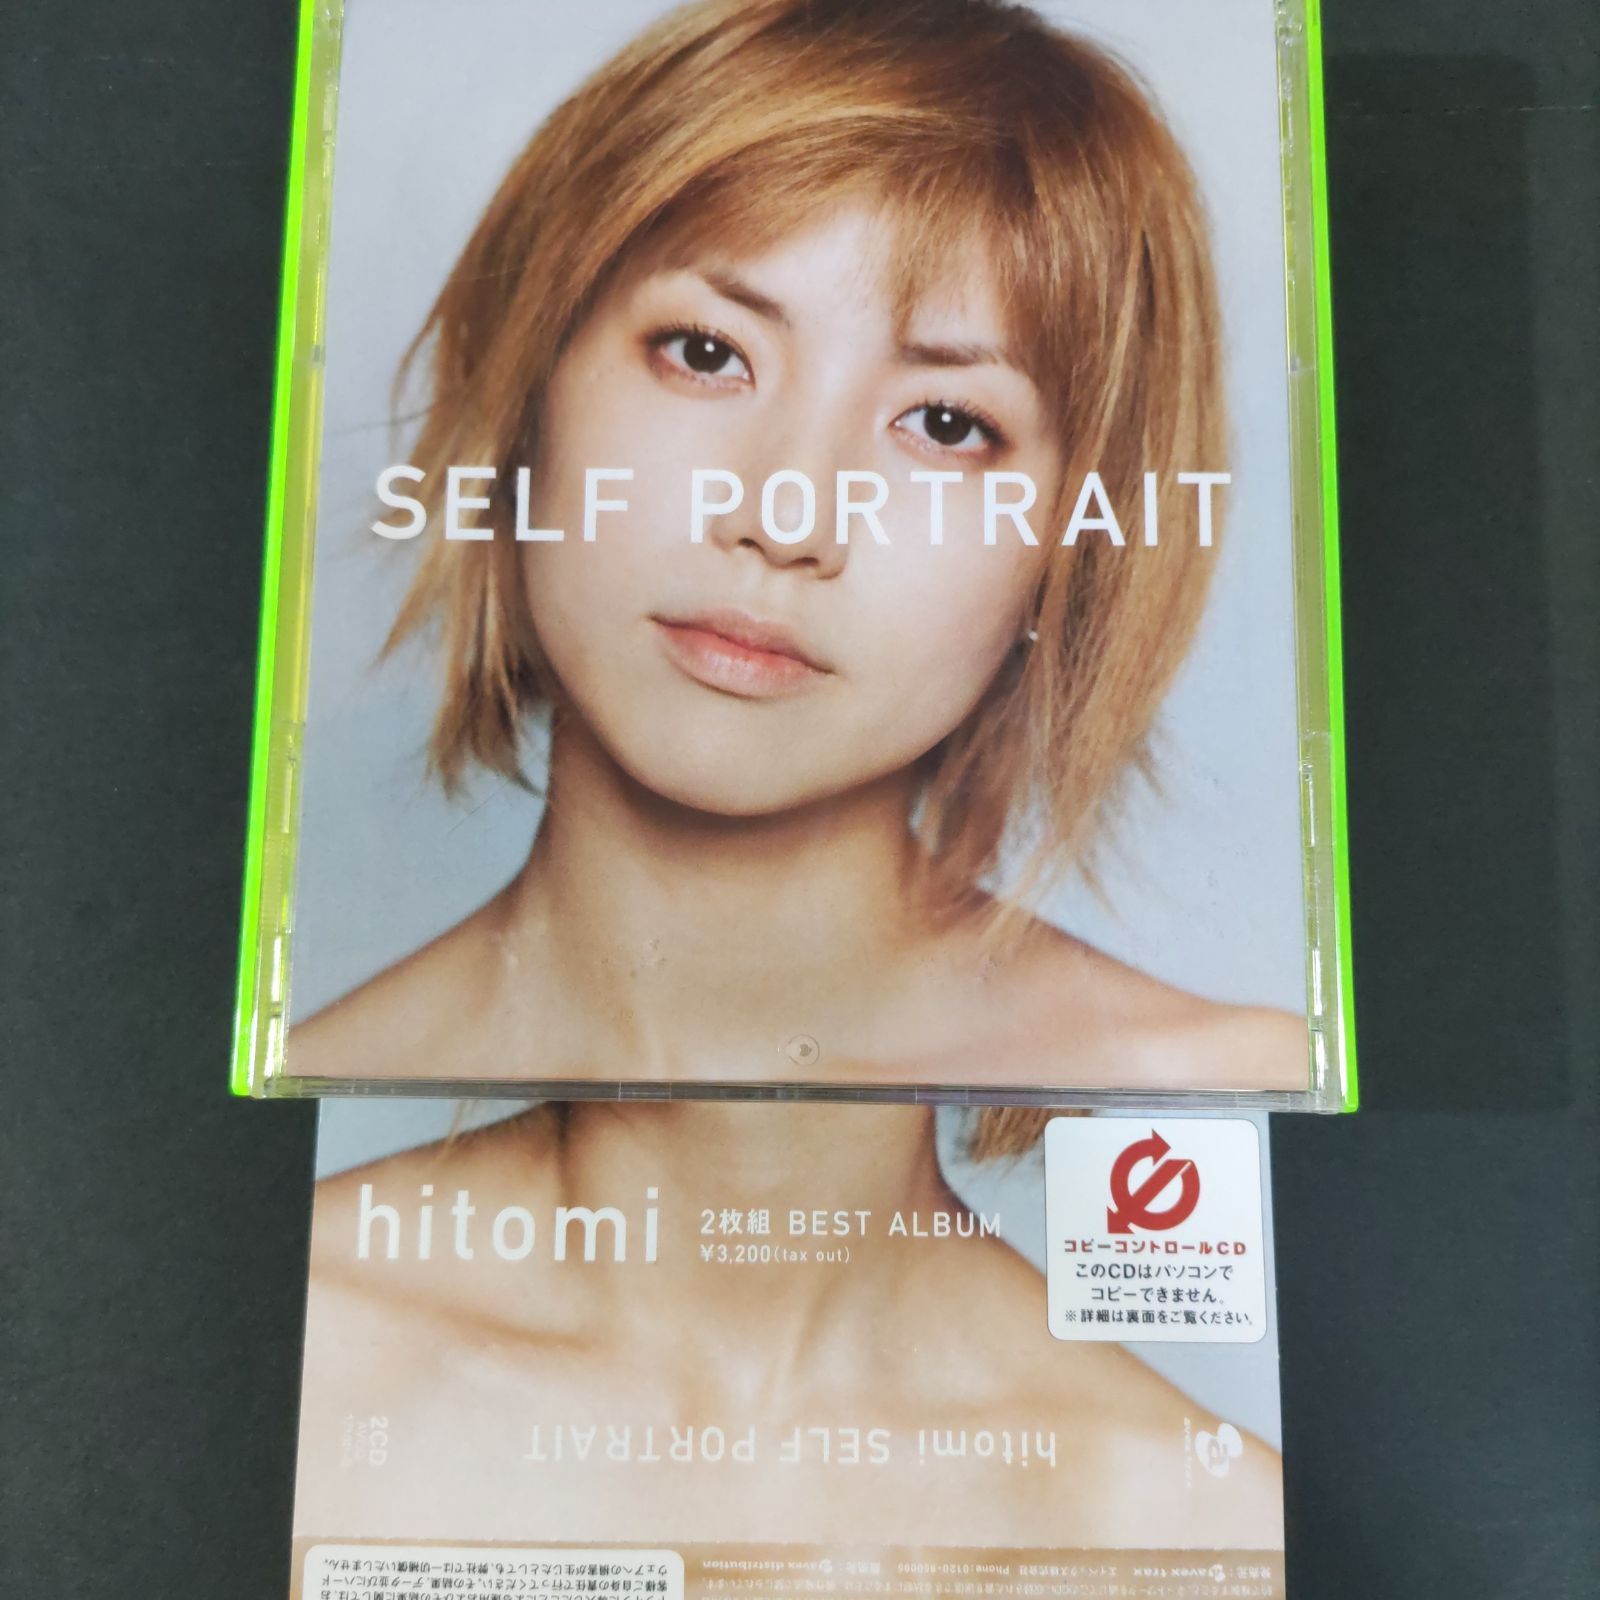 🍄hitomi2枚組ベストアルバム 「hitomi/SELF PORTRAIT」【2CD】 - メルカリ